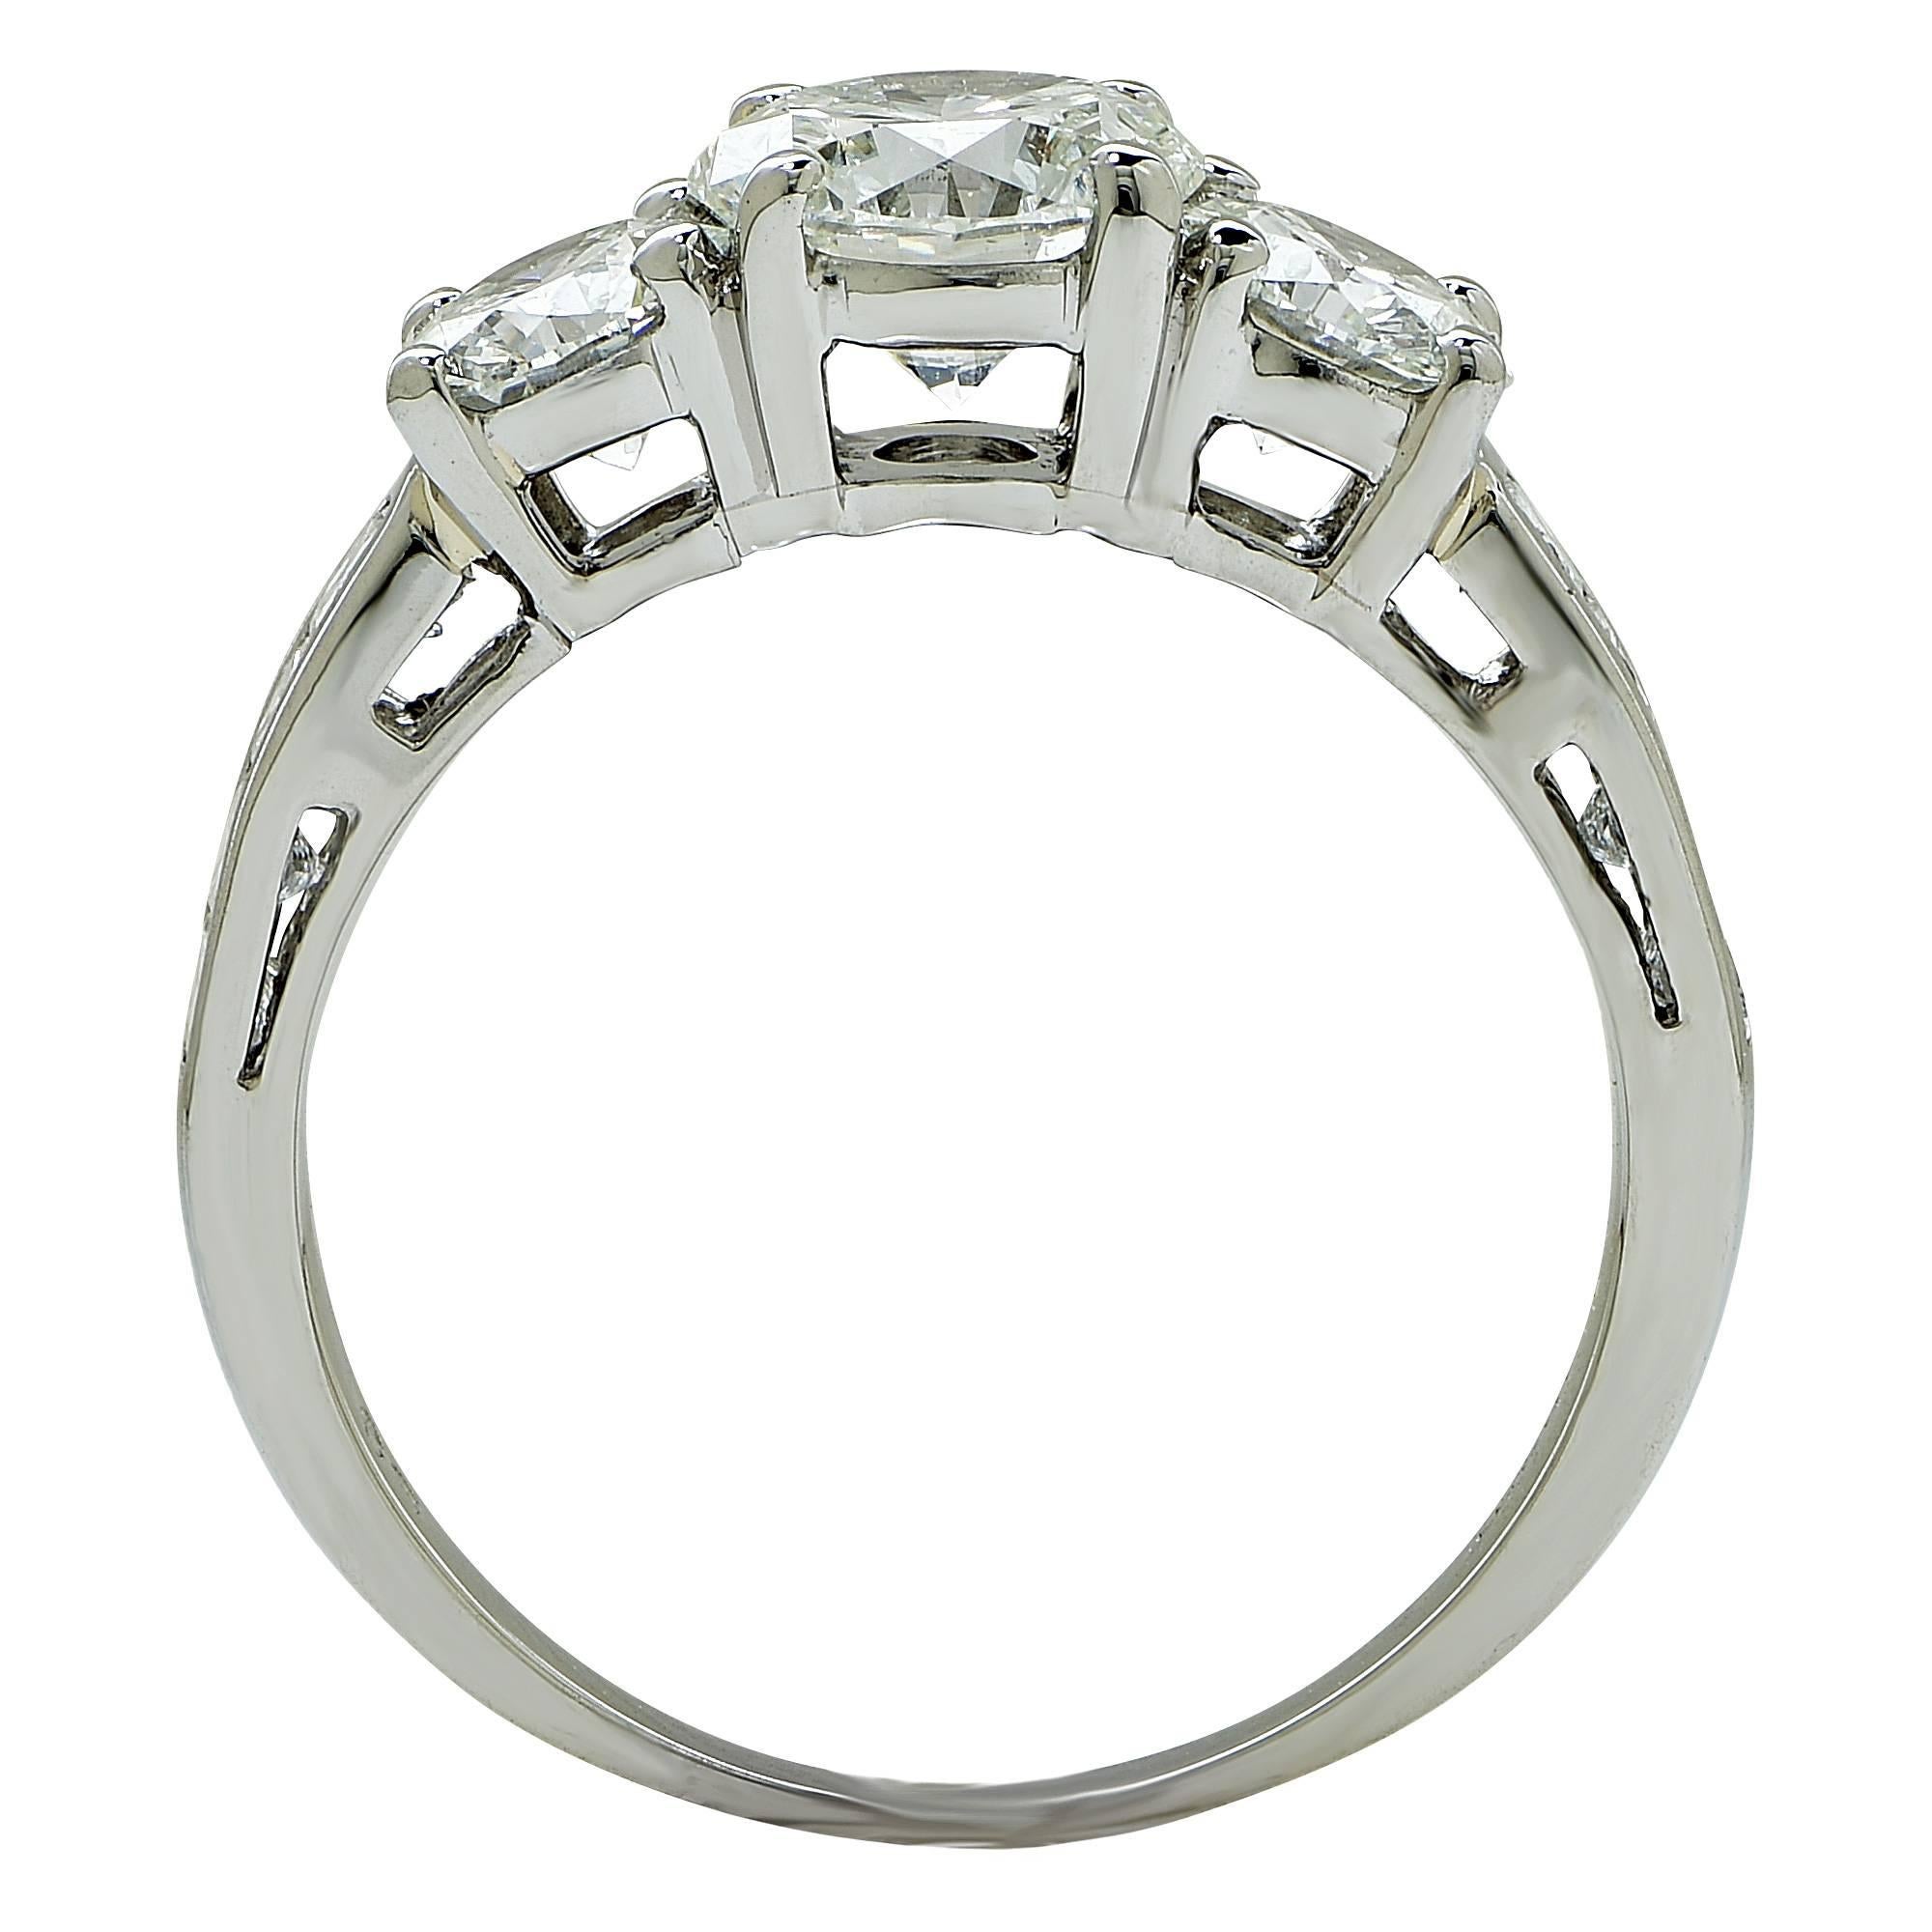 1.38 carat diamond ring